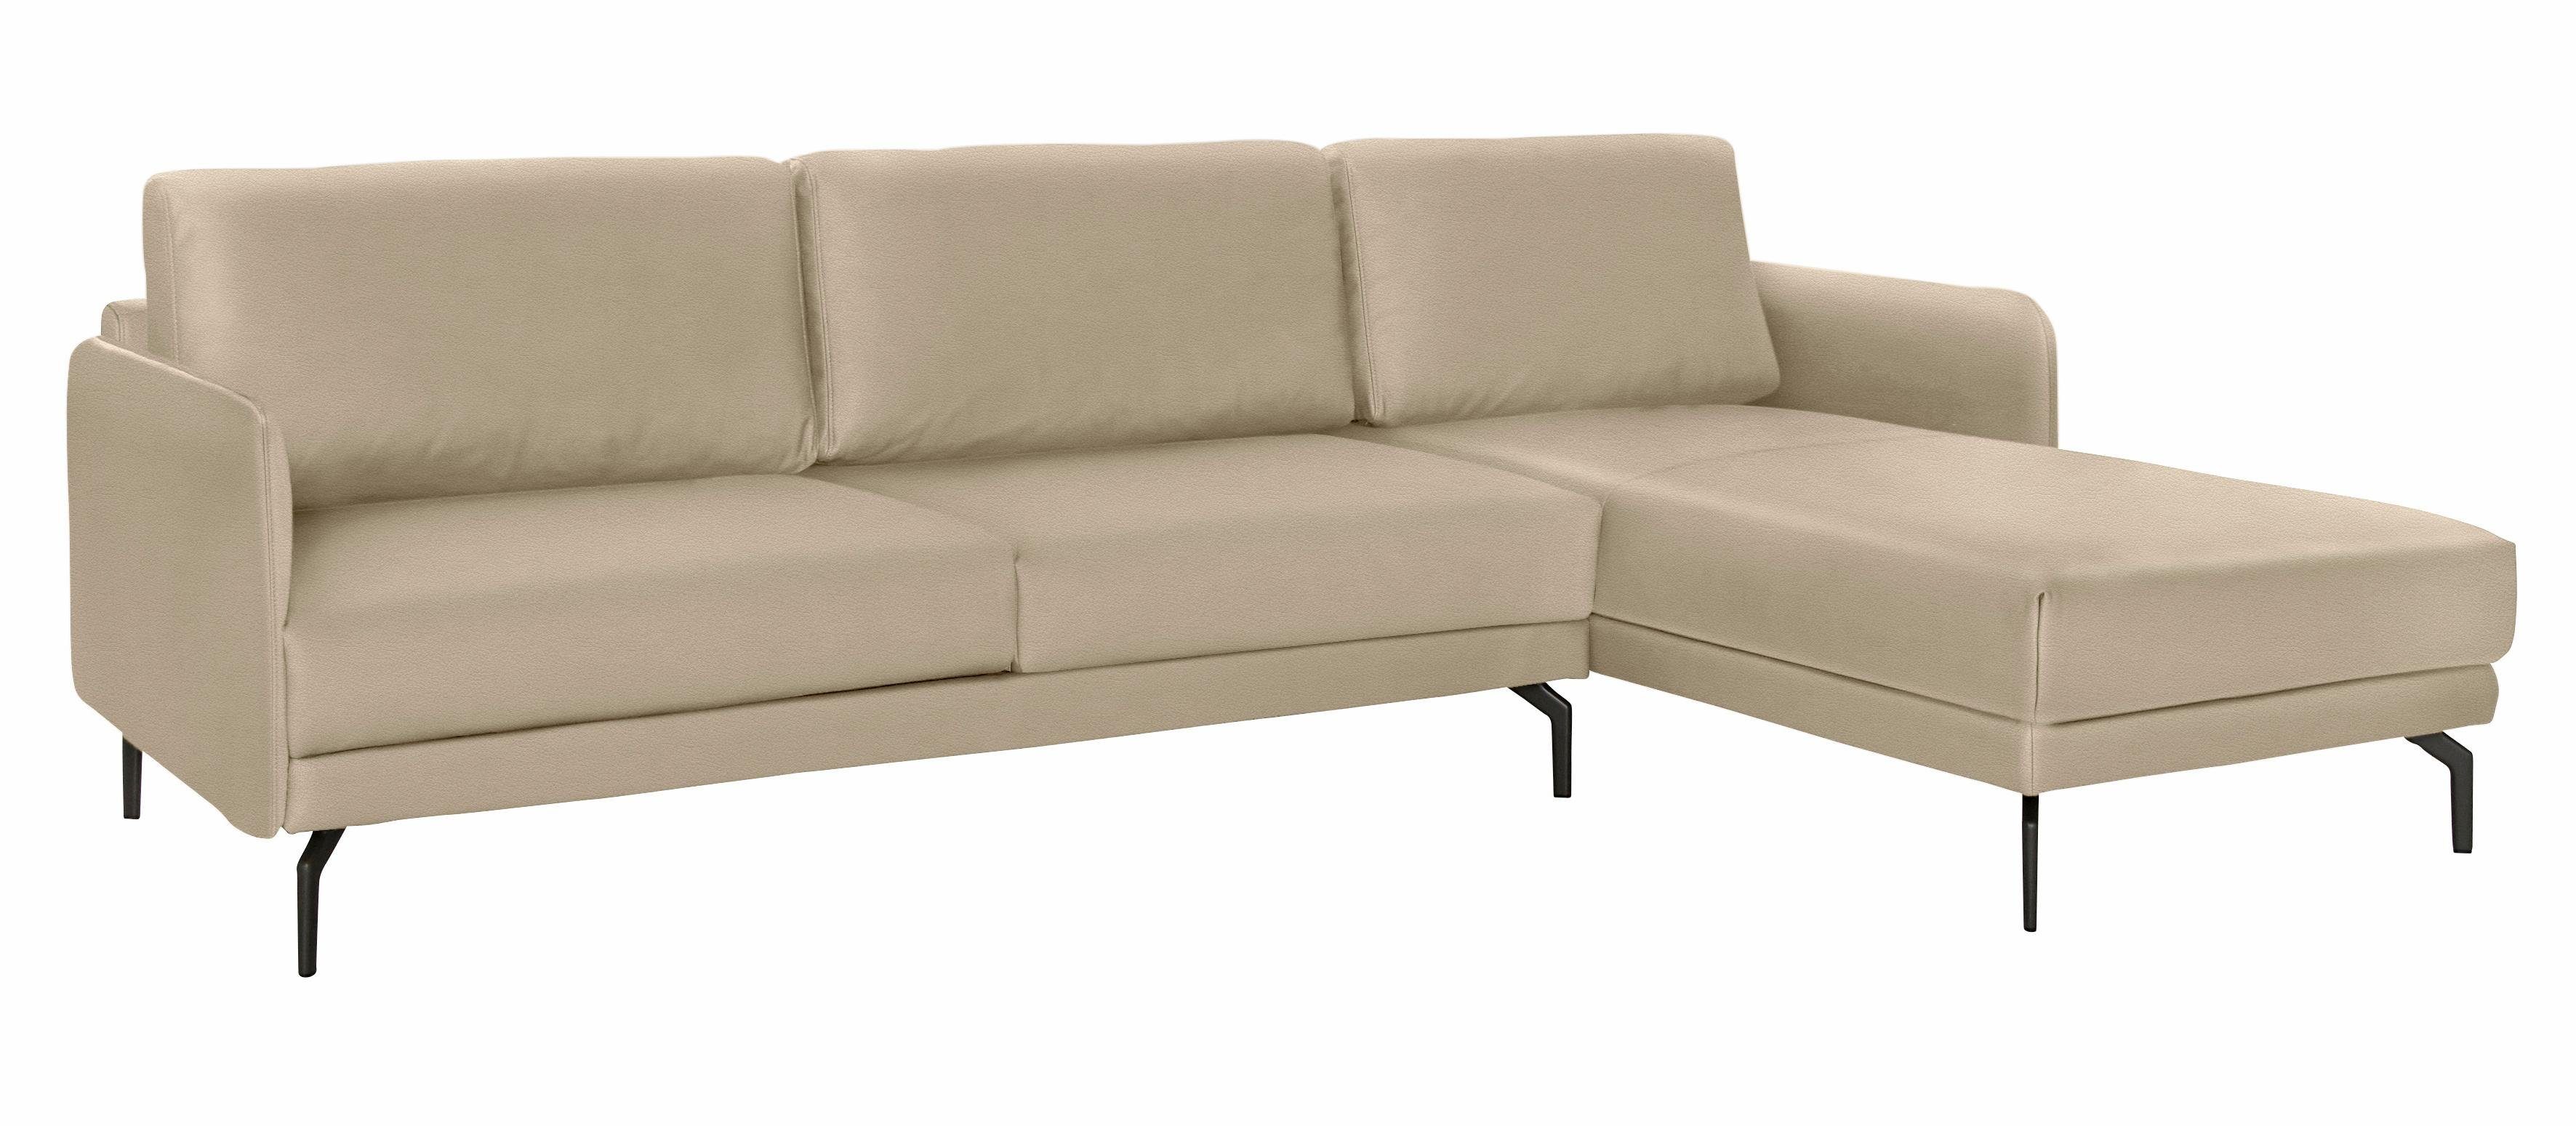 hülsta sofa Ecksofa hs.450, Armlehne sehr schmal, Breite 274 cm, Alugussfuß Umbragrau